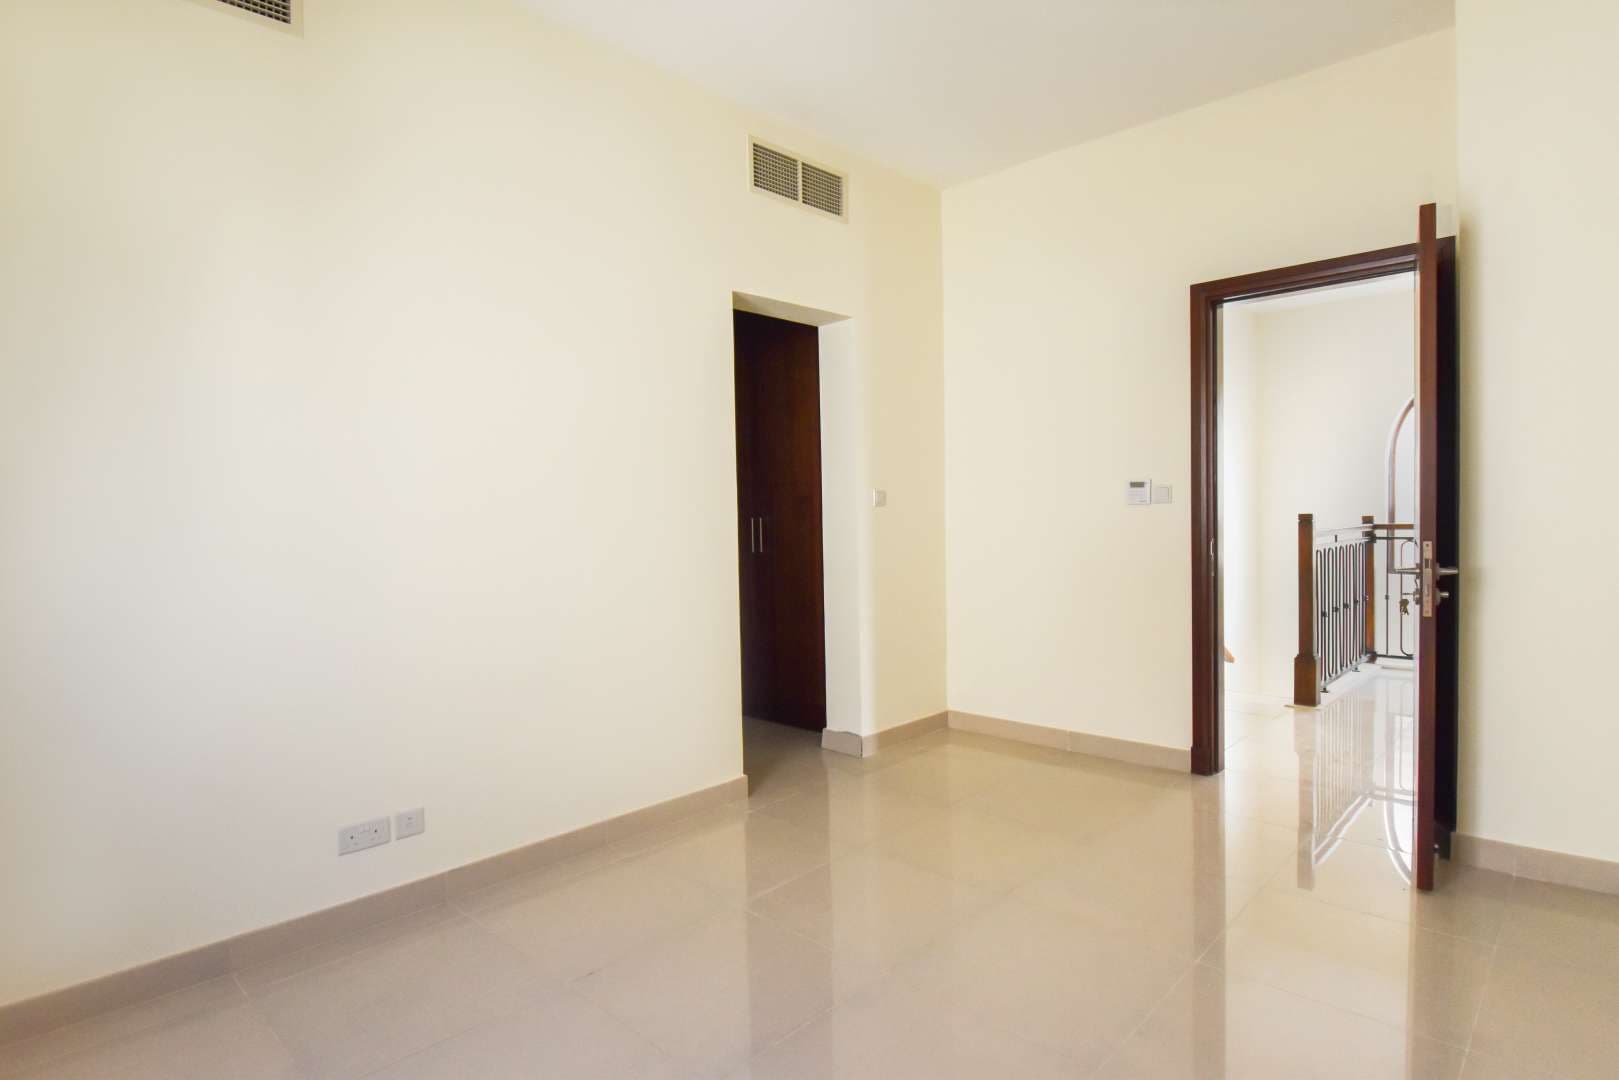 5 Bedroom Villa For Rent Samara Lp12103 20d9ef4558554a00.jpg